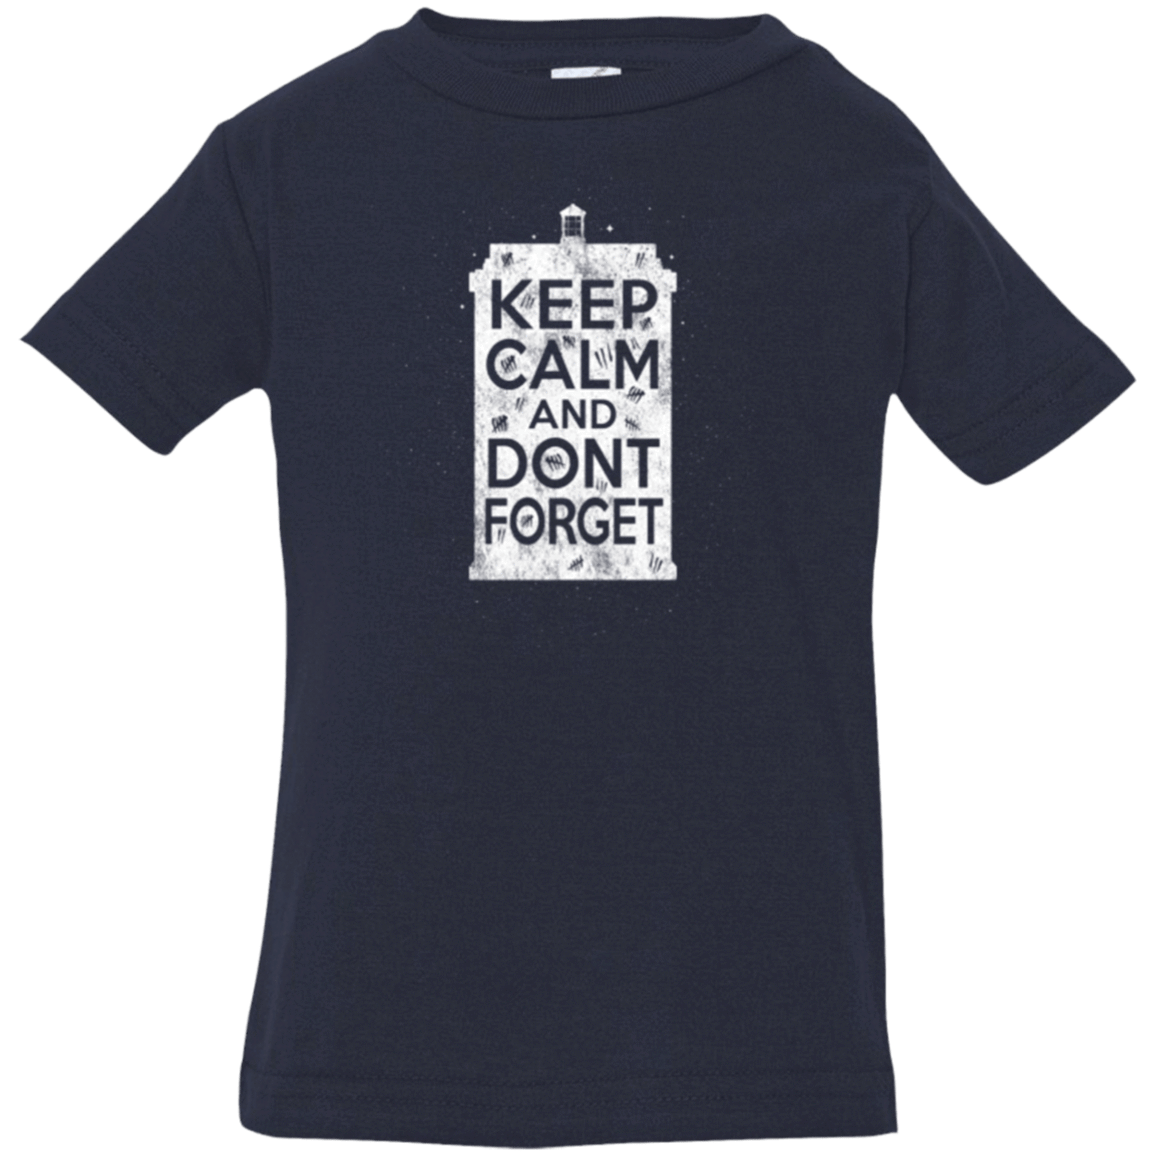 T-Shirts Navy / 6 Months KCDF Tardis Infant Premium T-Shirt